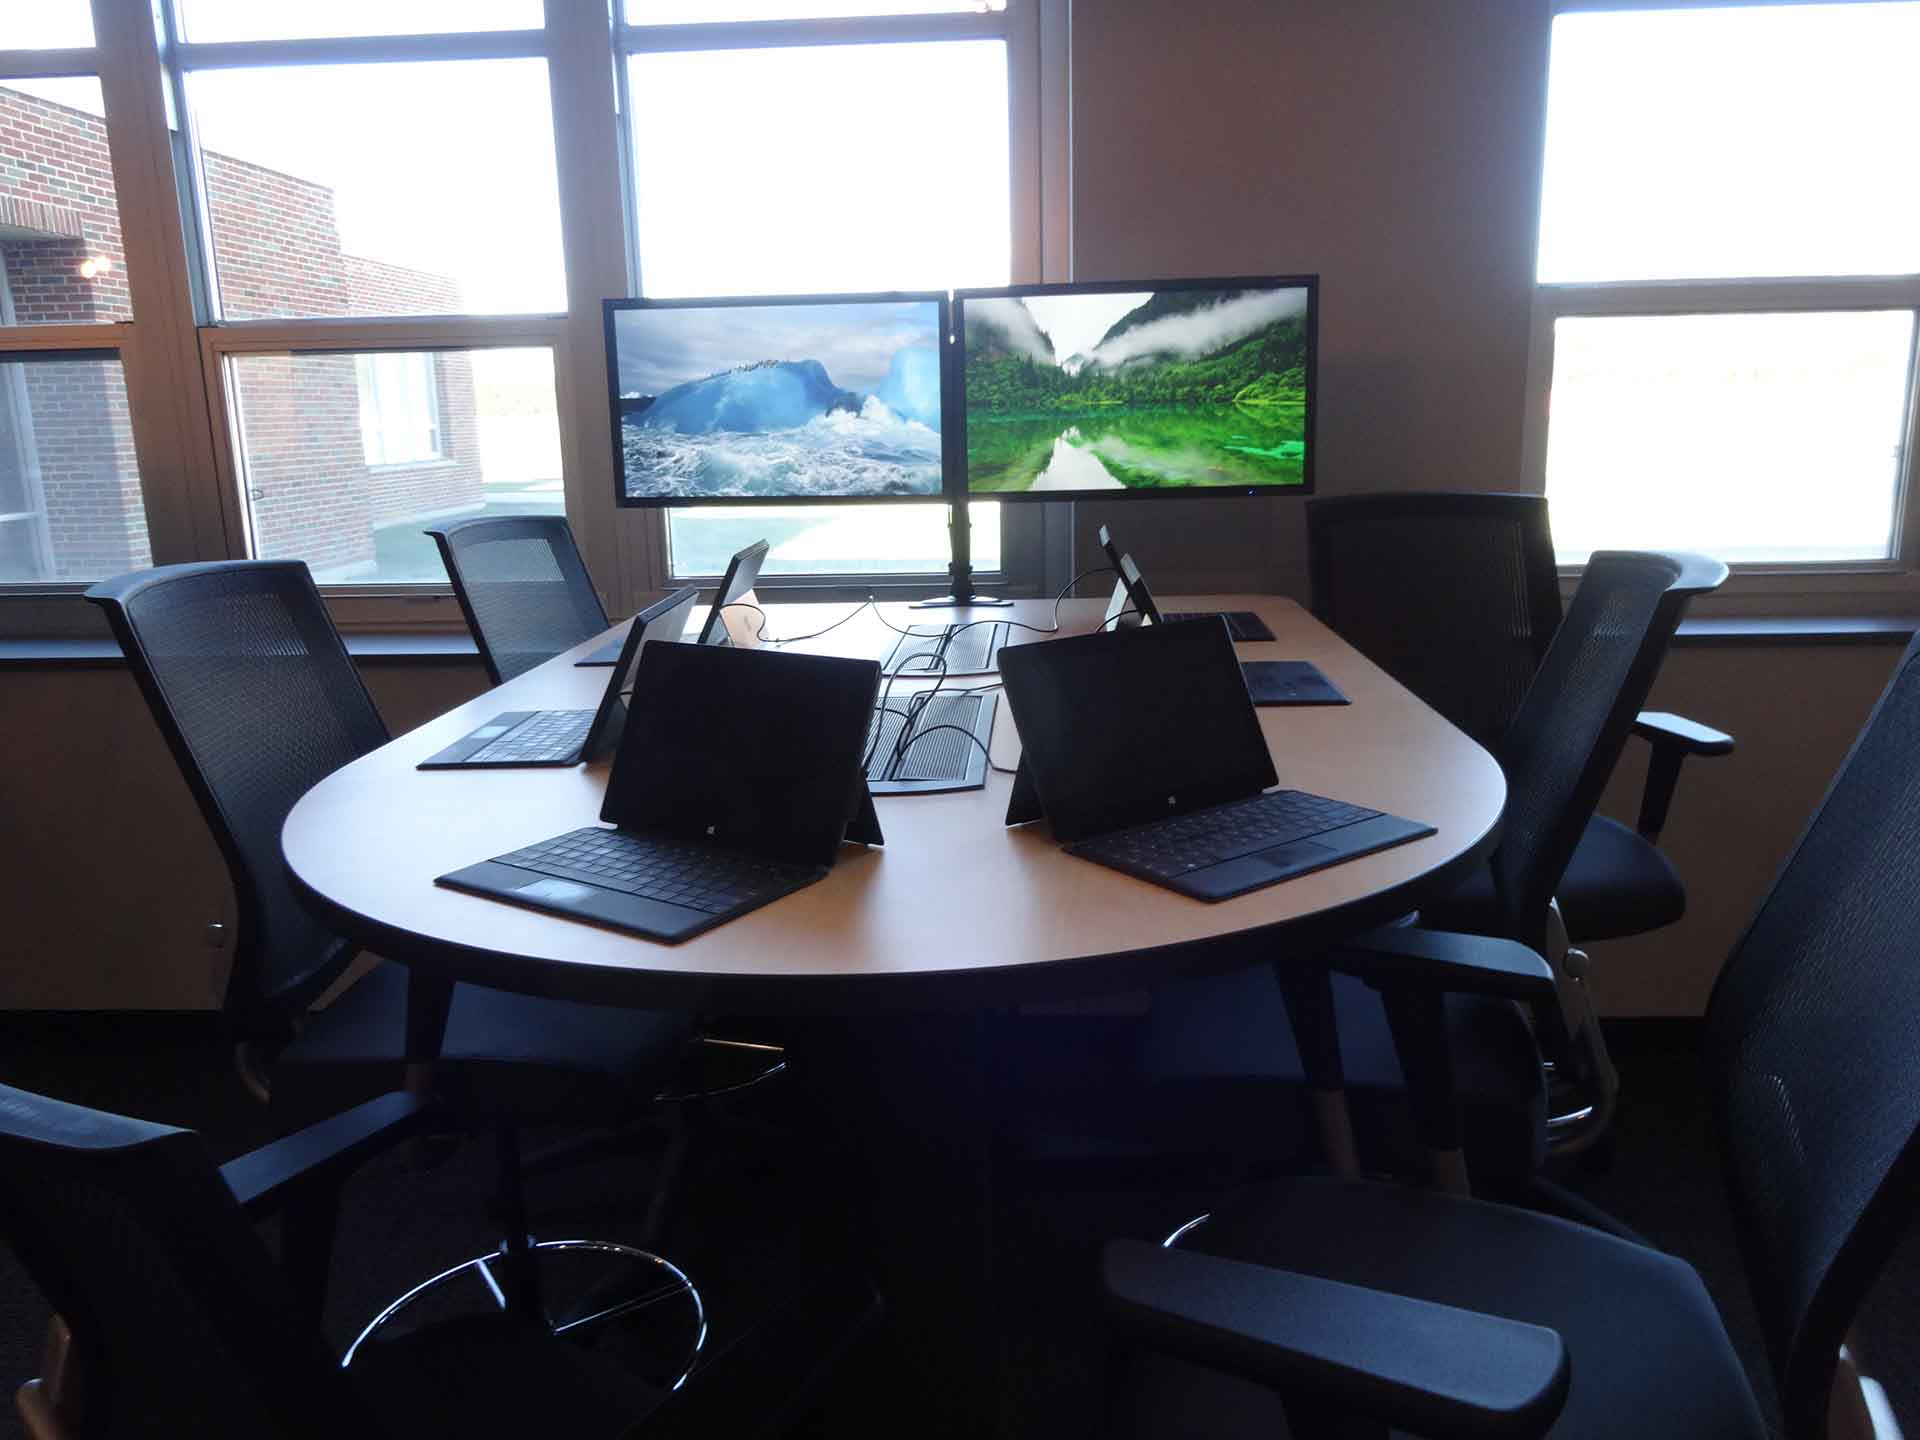 marist-idea-program-desks-with-laptops-and-montiros-by-windows